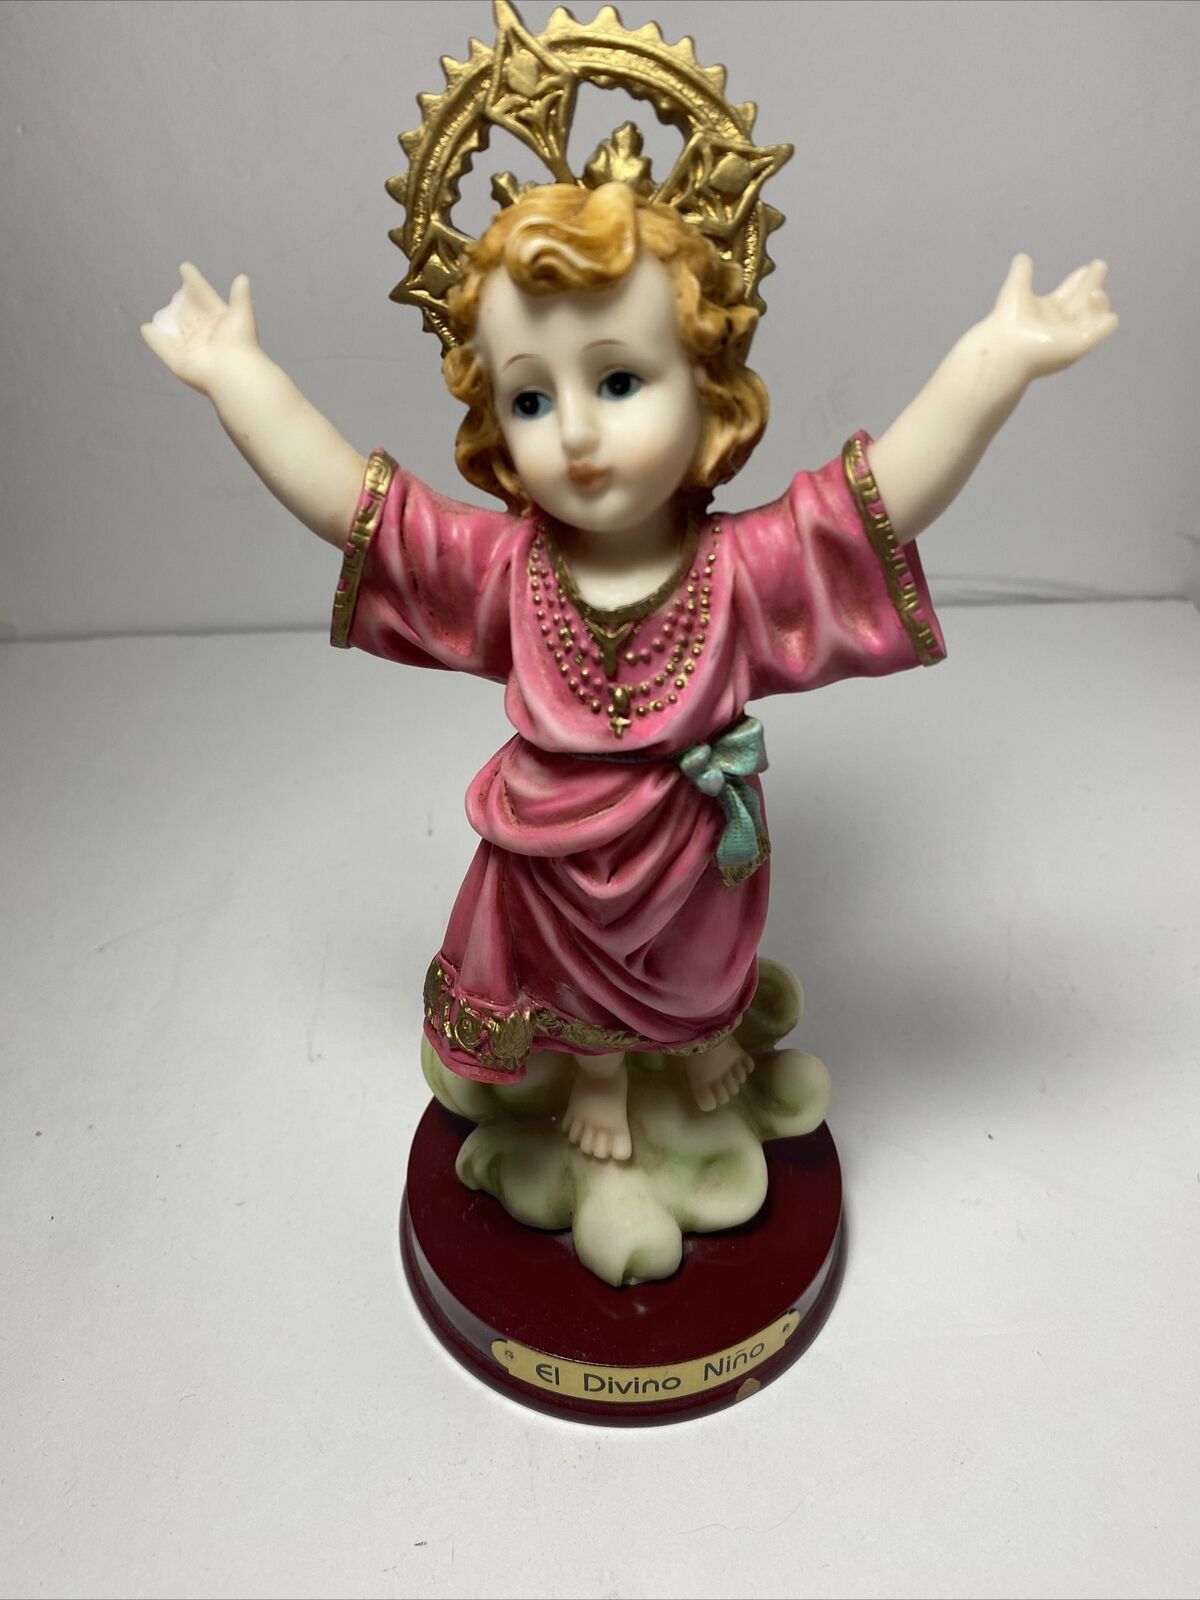 El Divino Nino Figurine The Divine Child